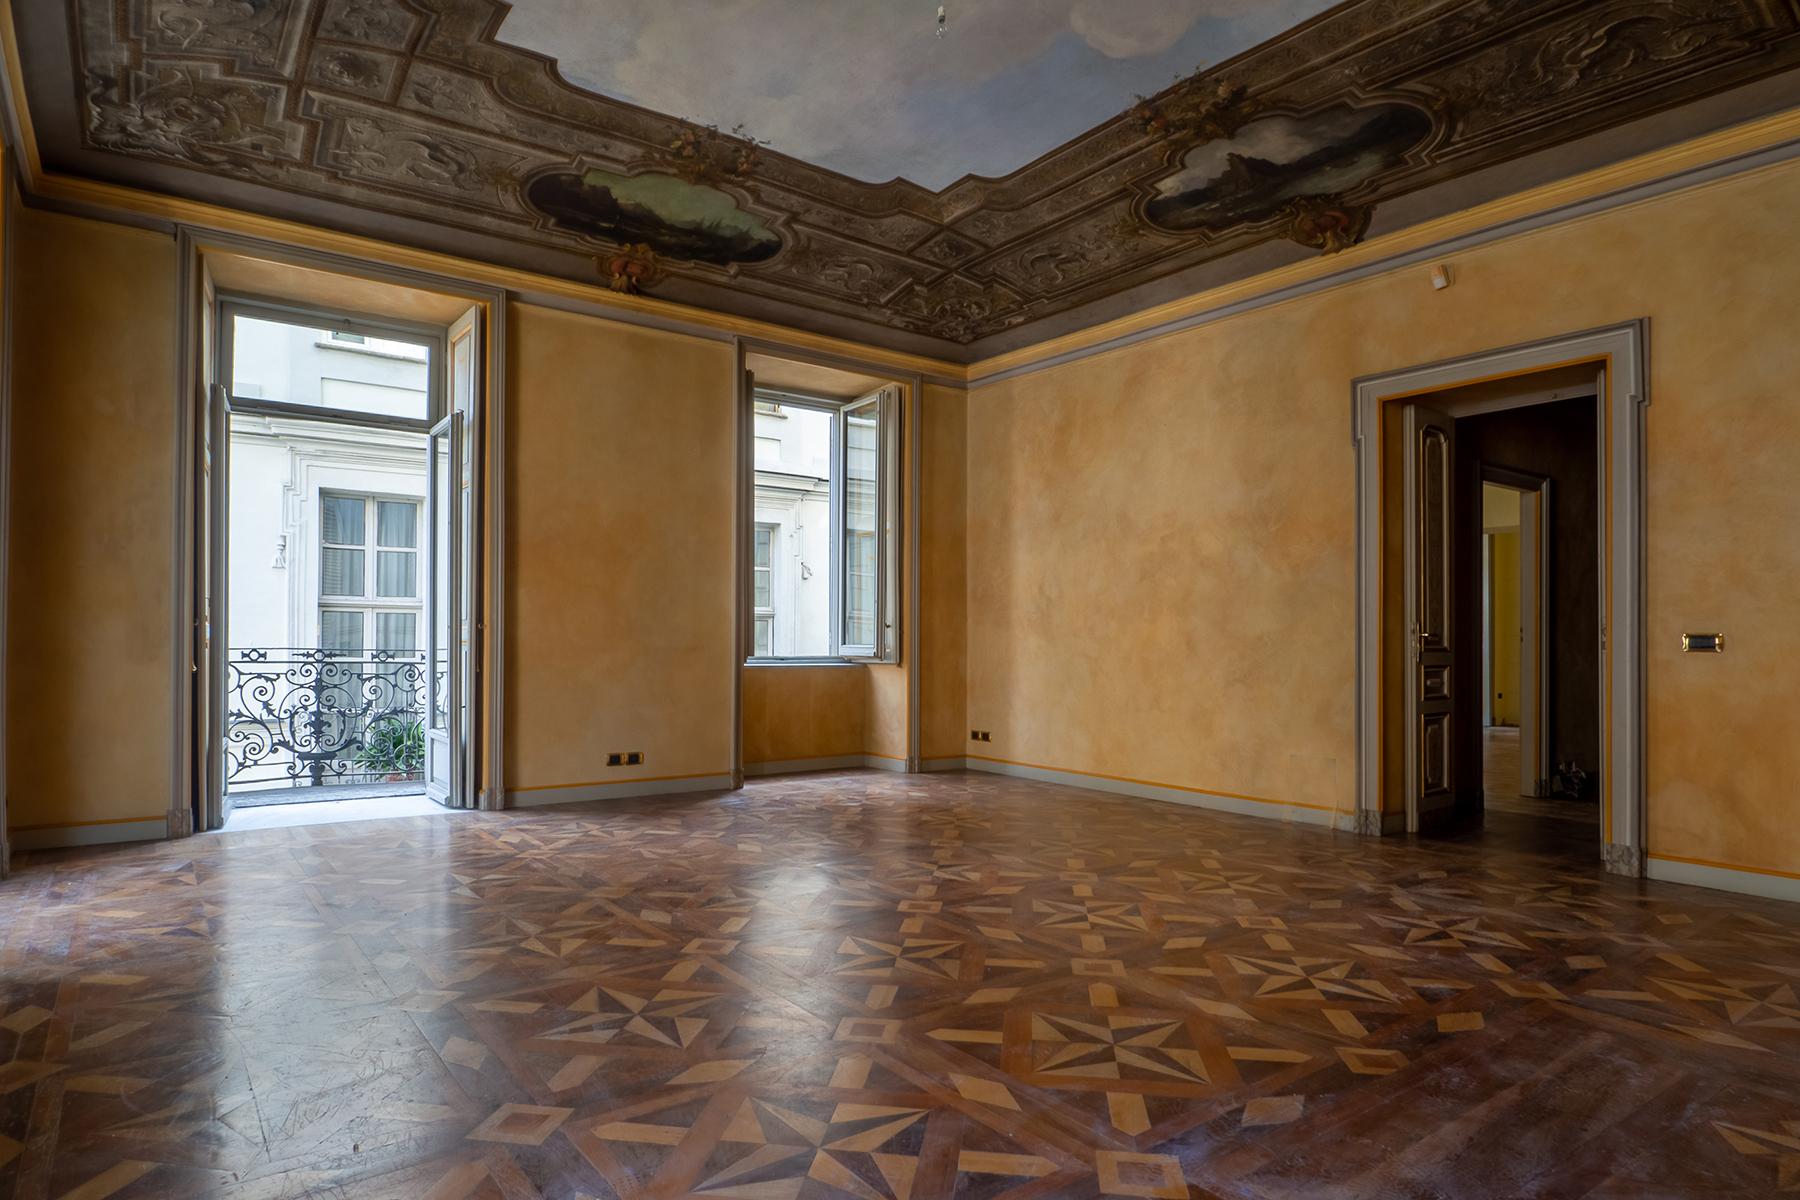 Prestigious apartment in the historical center of Turin - 5